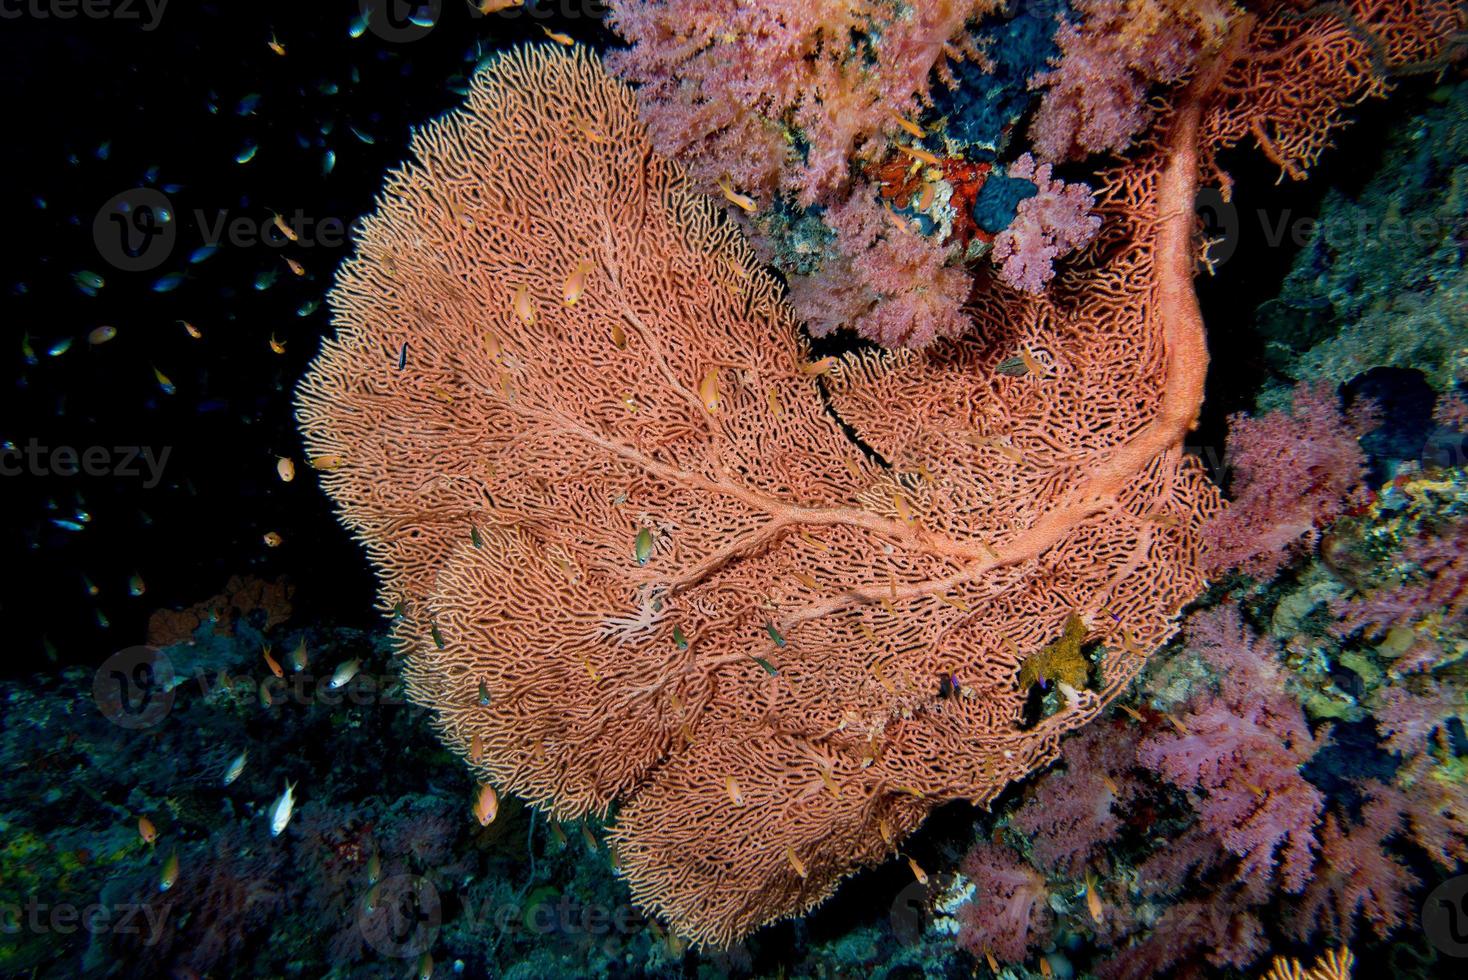 gorgonia mjuk korall i de svart bakgrund foto